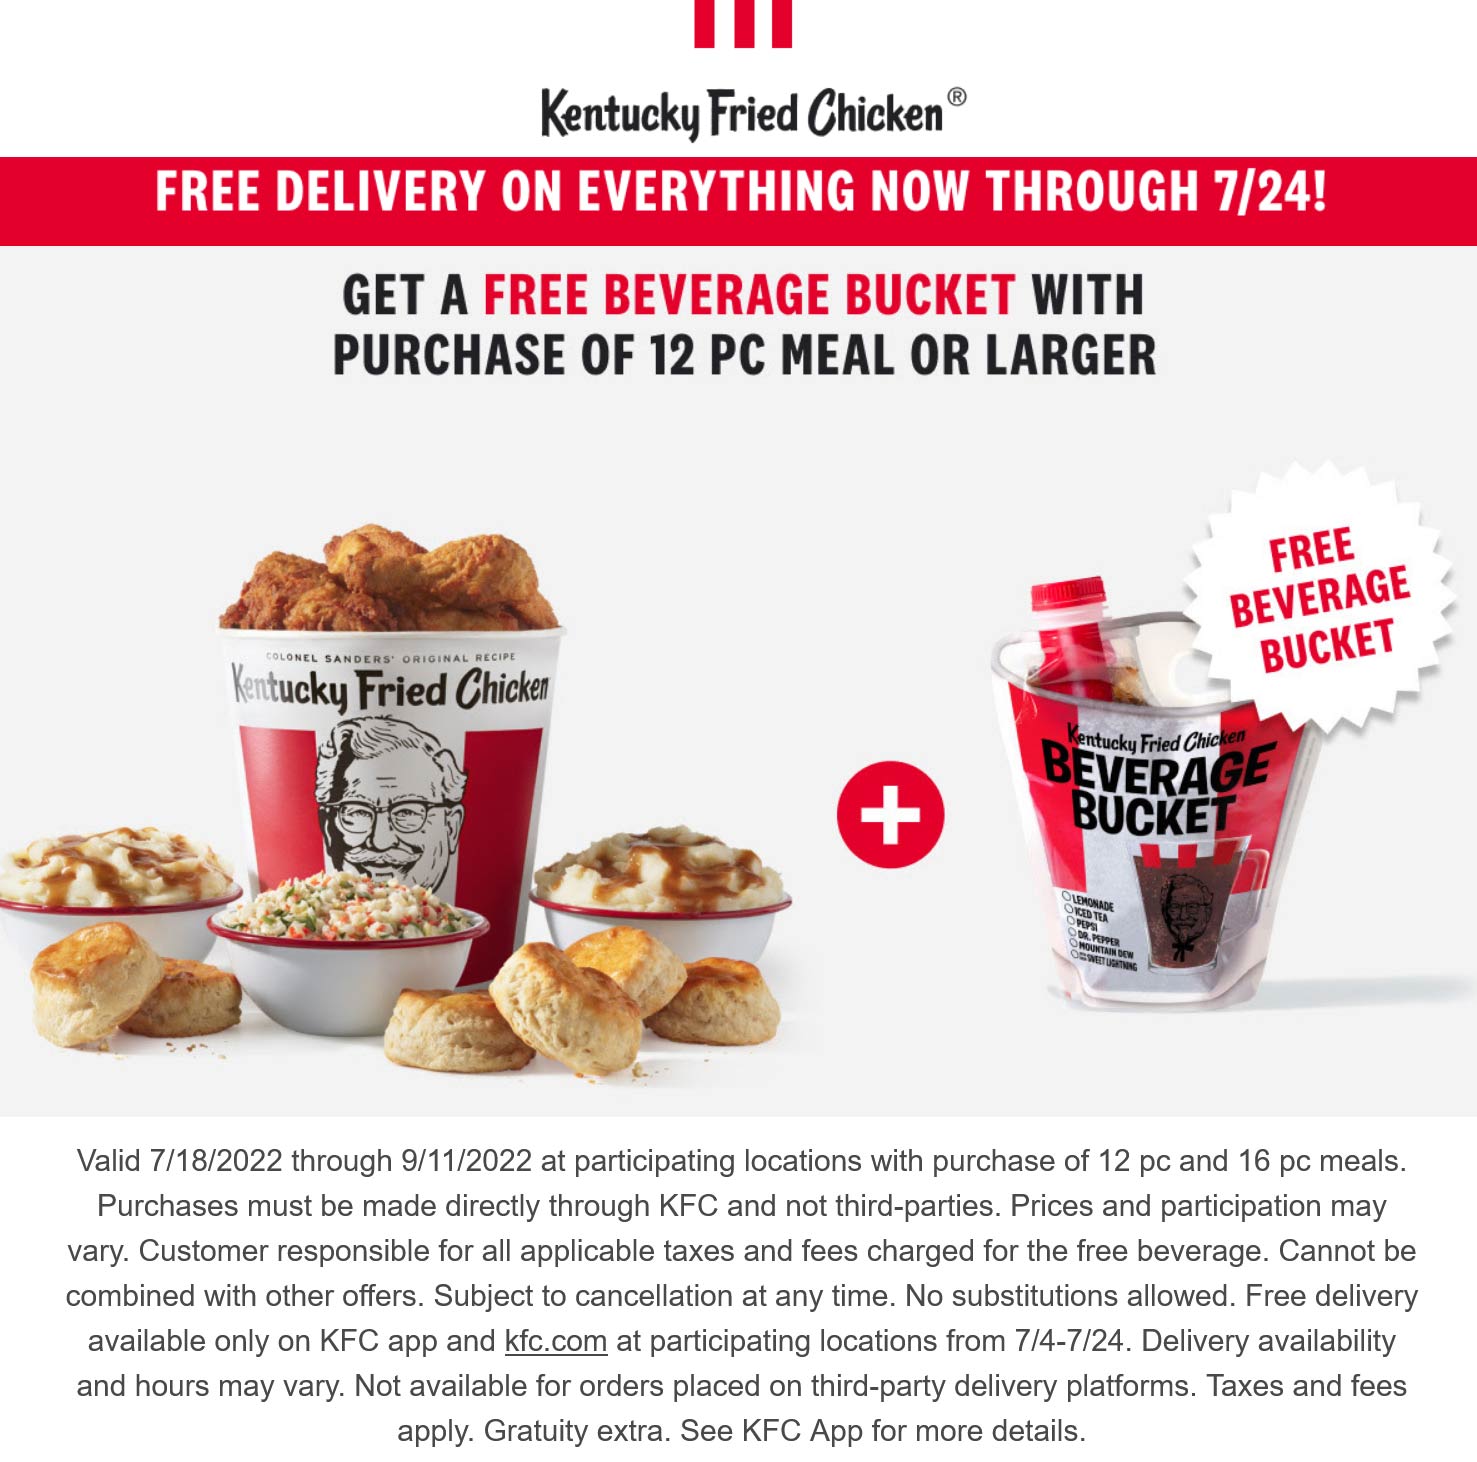 KFC restaurants Coupon  Free beverage bucket with 12pc+ meal at KFC #kfc 